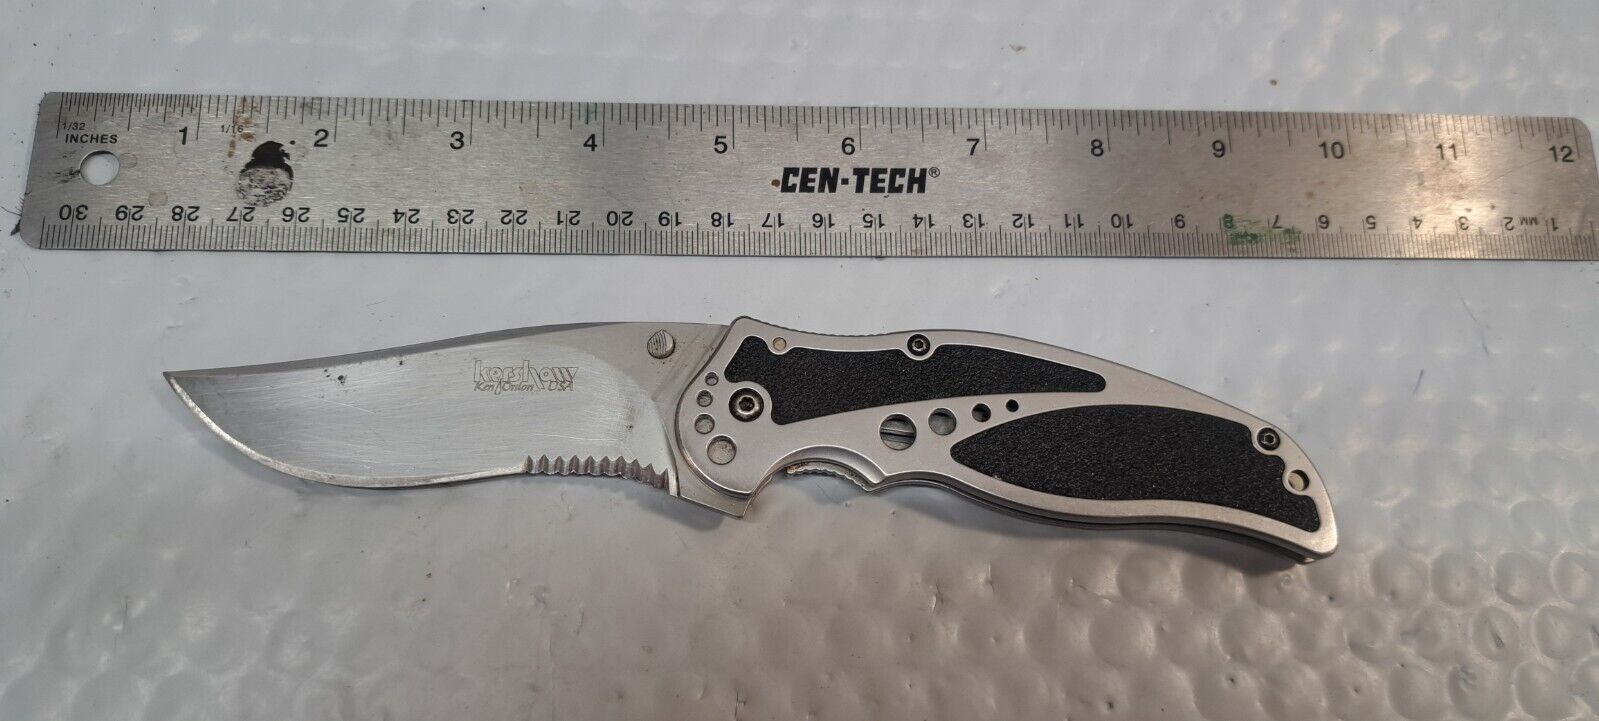 Kershaw USA 1475ST Folding Knife DISCONTINUED